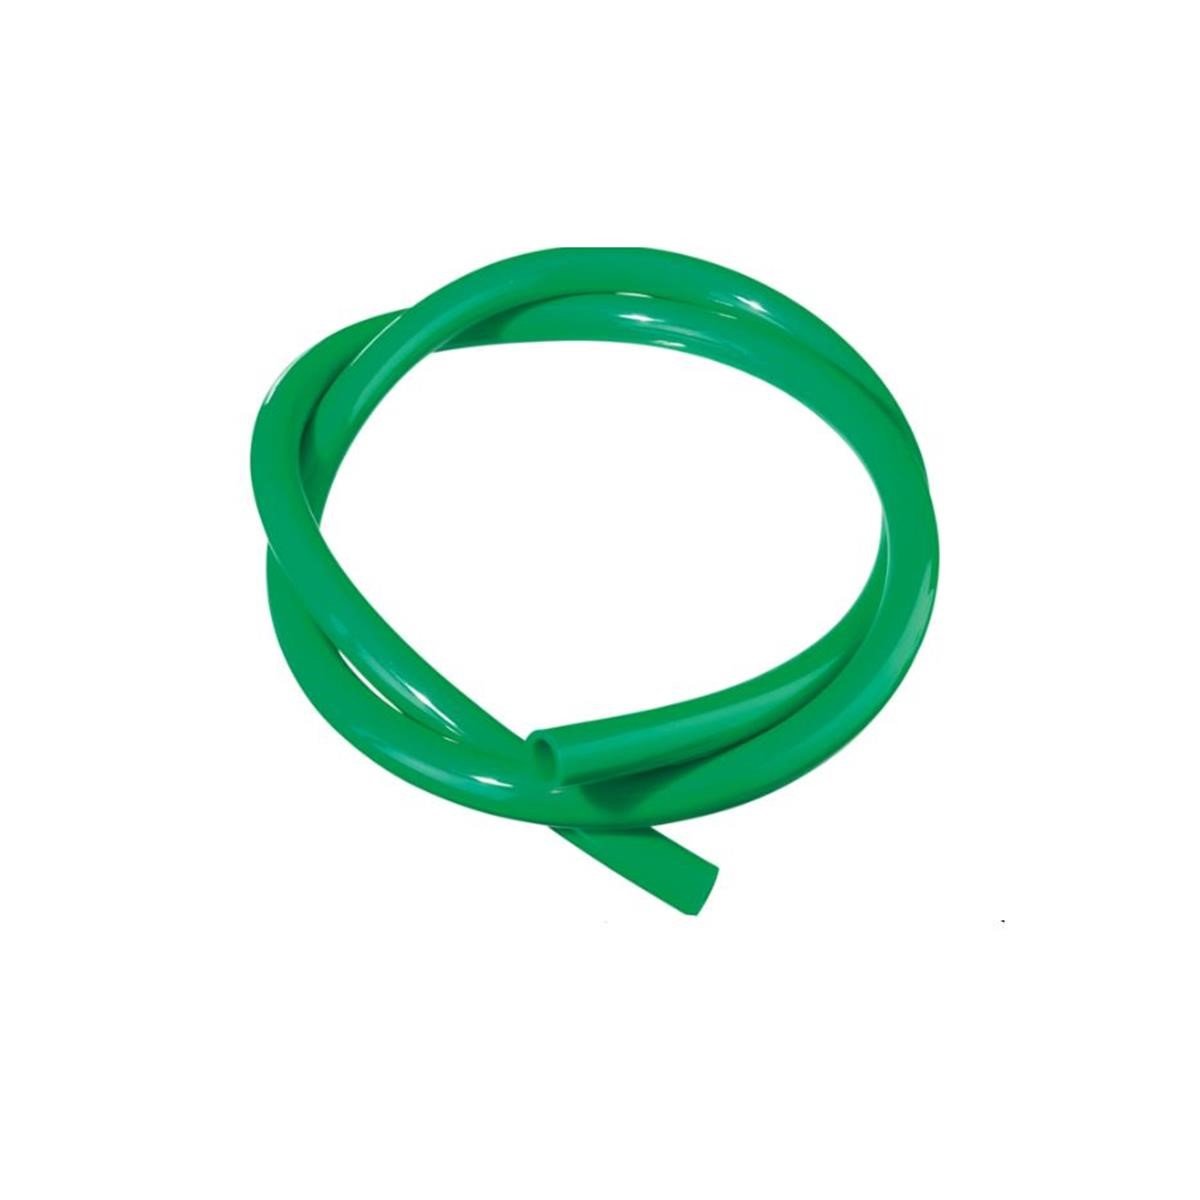 Moose Racing fuel hose 4.8 mm Green, 91 cm long